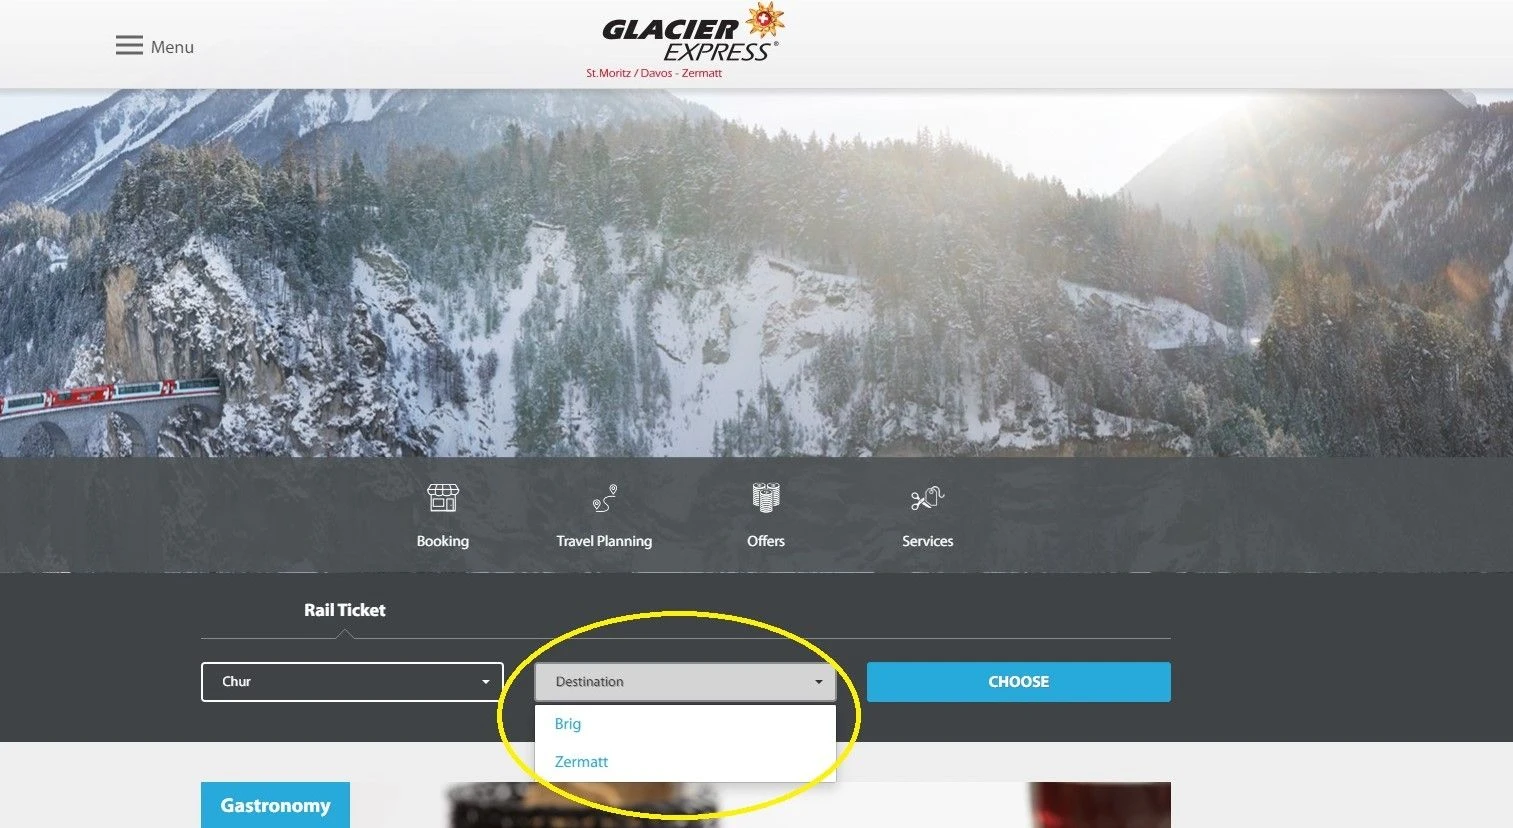 Choosing destination on the Glacier Express website